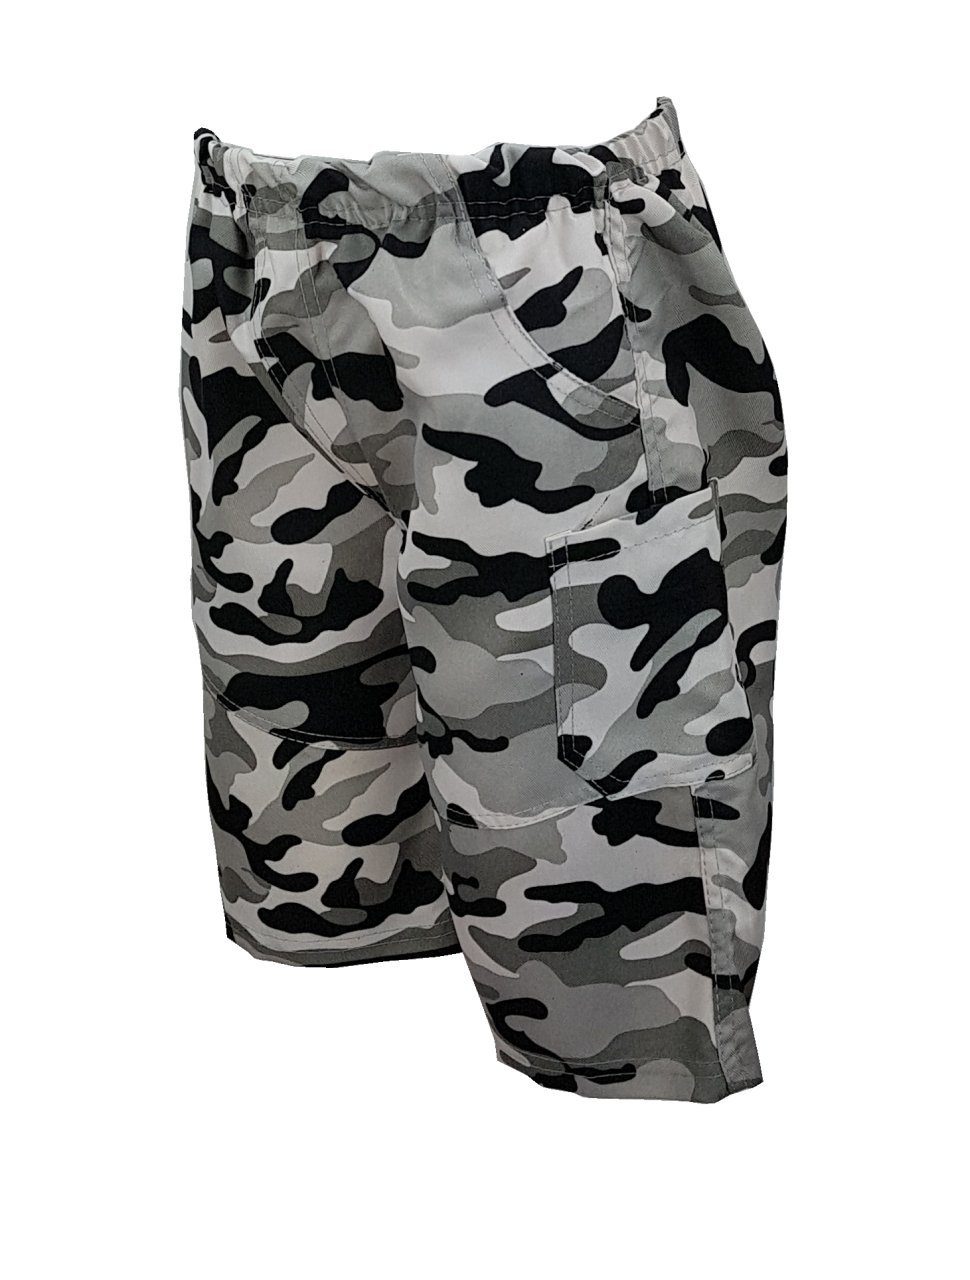 Hessis Shirt & Shorts Jungen Sport- js11 + in Hose & Camouflage Grau Freizeitset, Shirt